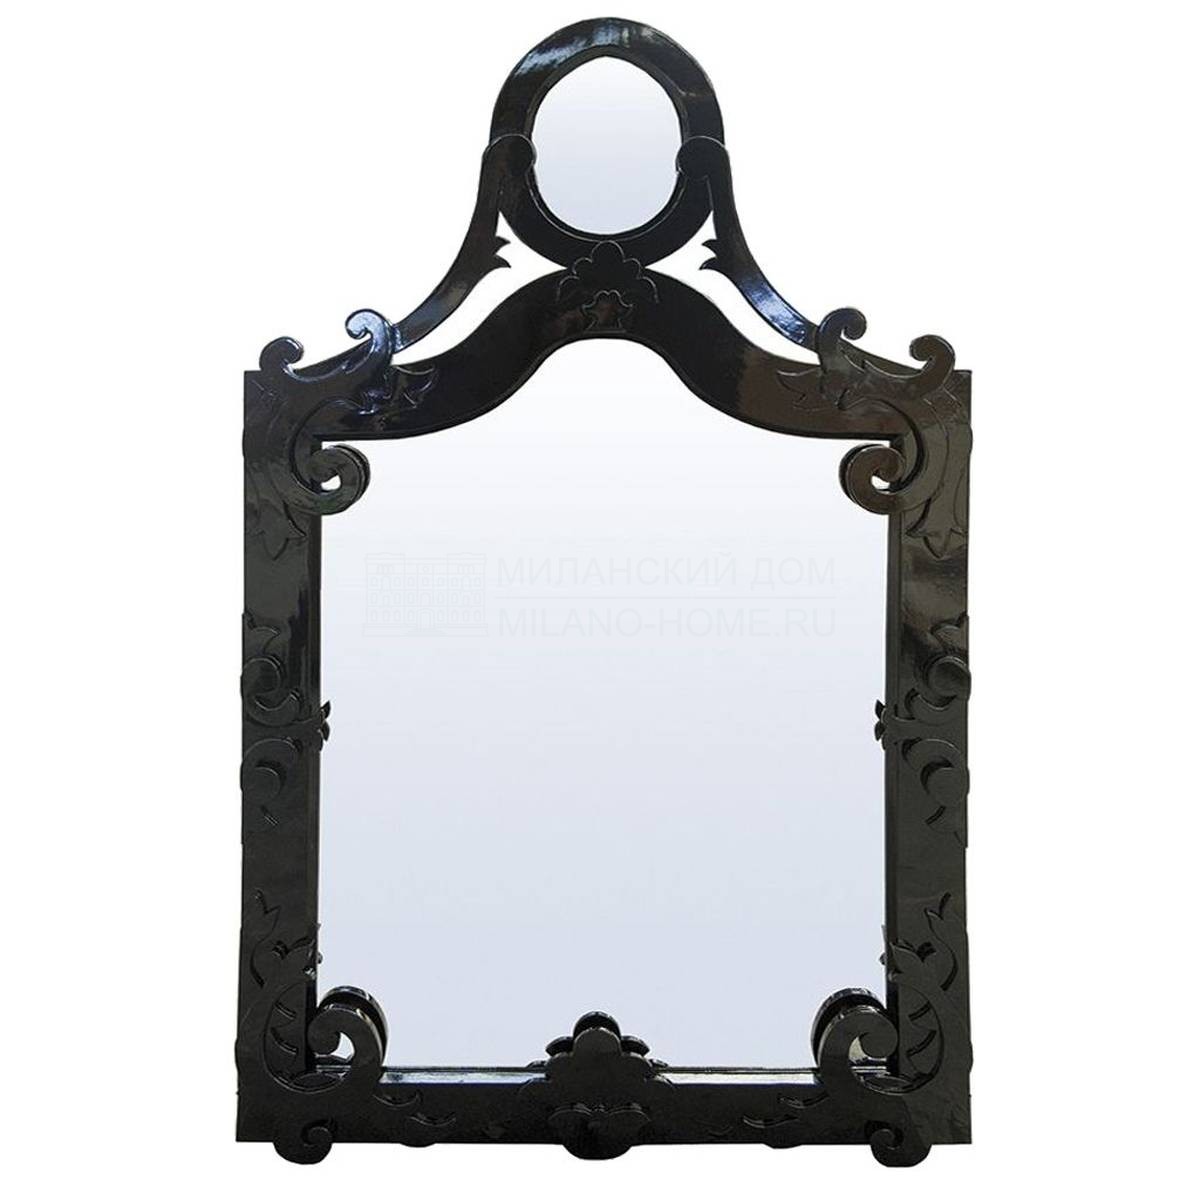 Зеркало настенное M-1229 mirror из Испании фабрики GUADARTE